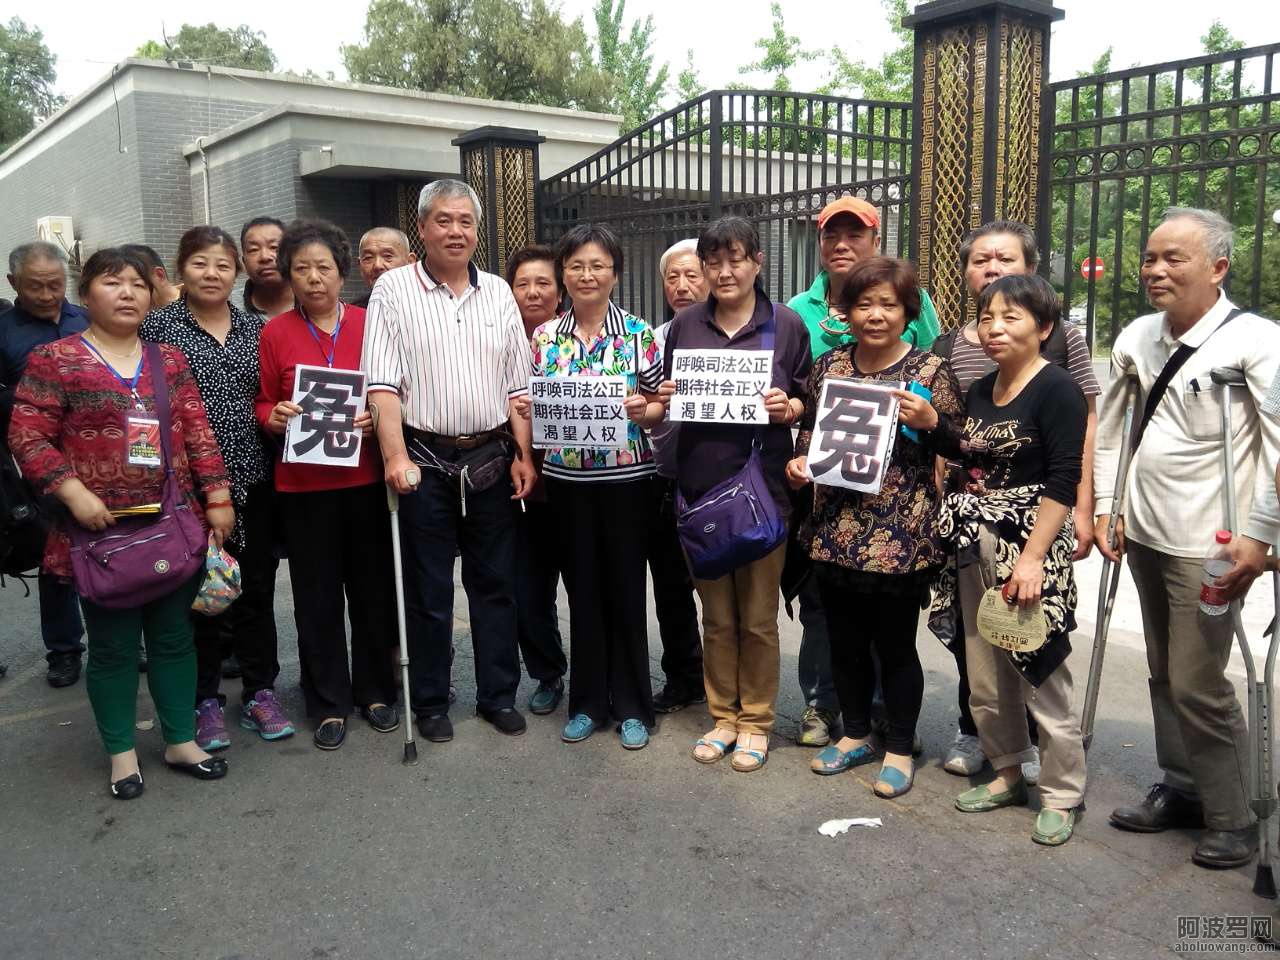 J上海1308人集访党中央，不被截访不被登记，与徐纯合案有关？